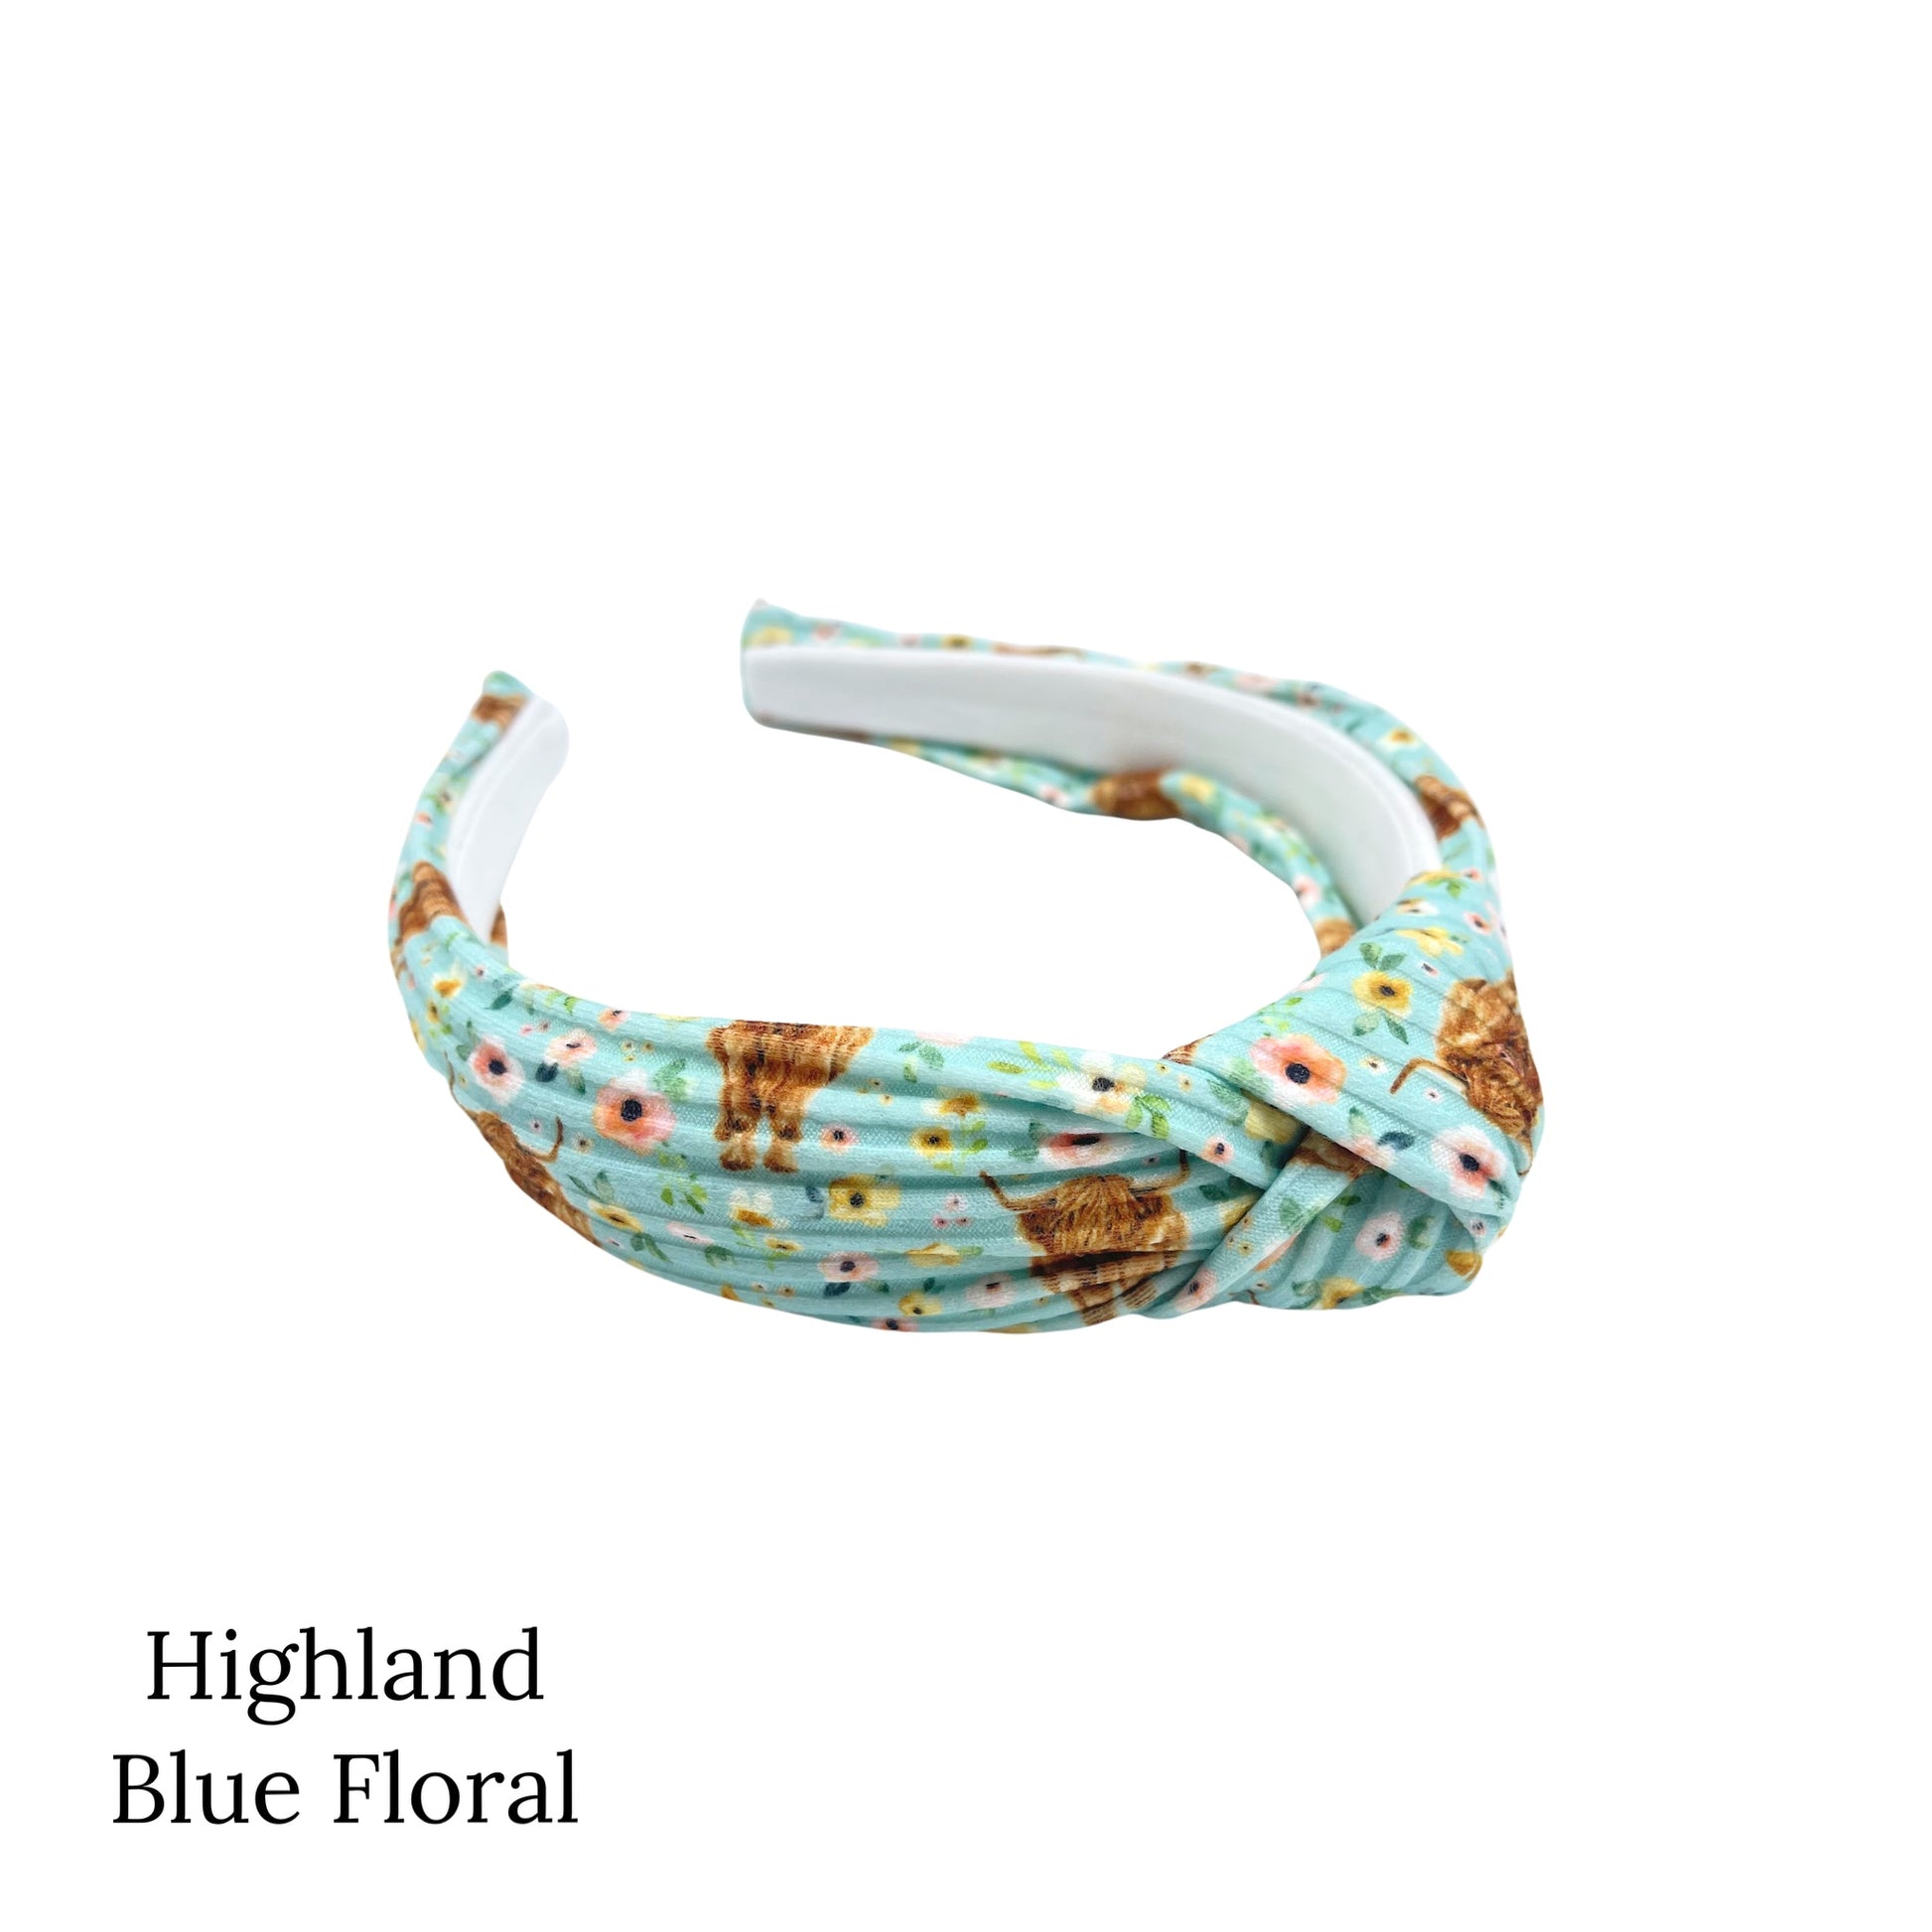 Farm animals knotted headbands. Highland blue floral patterned headband. 